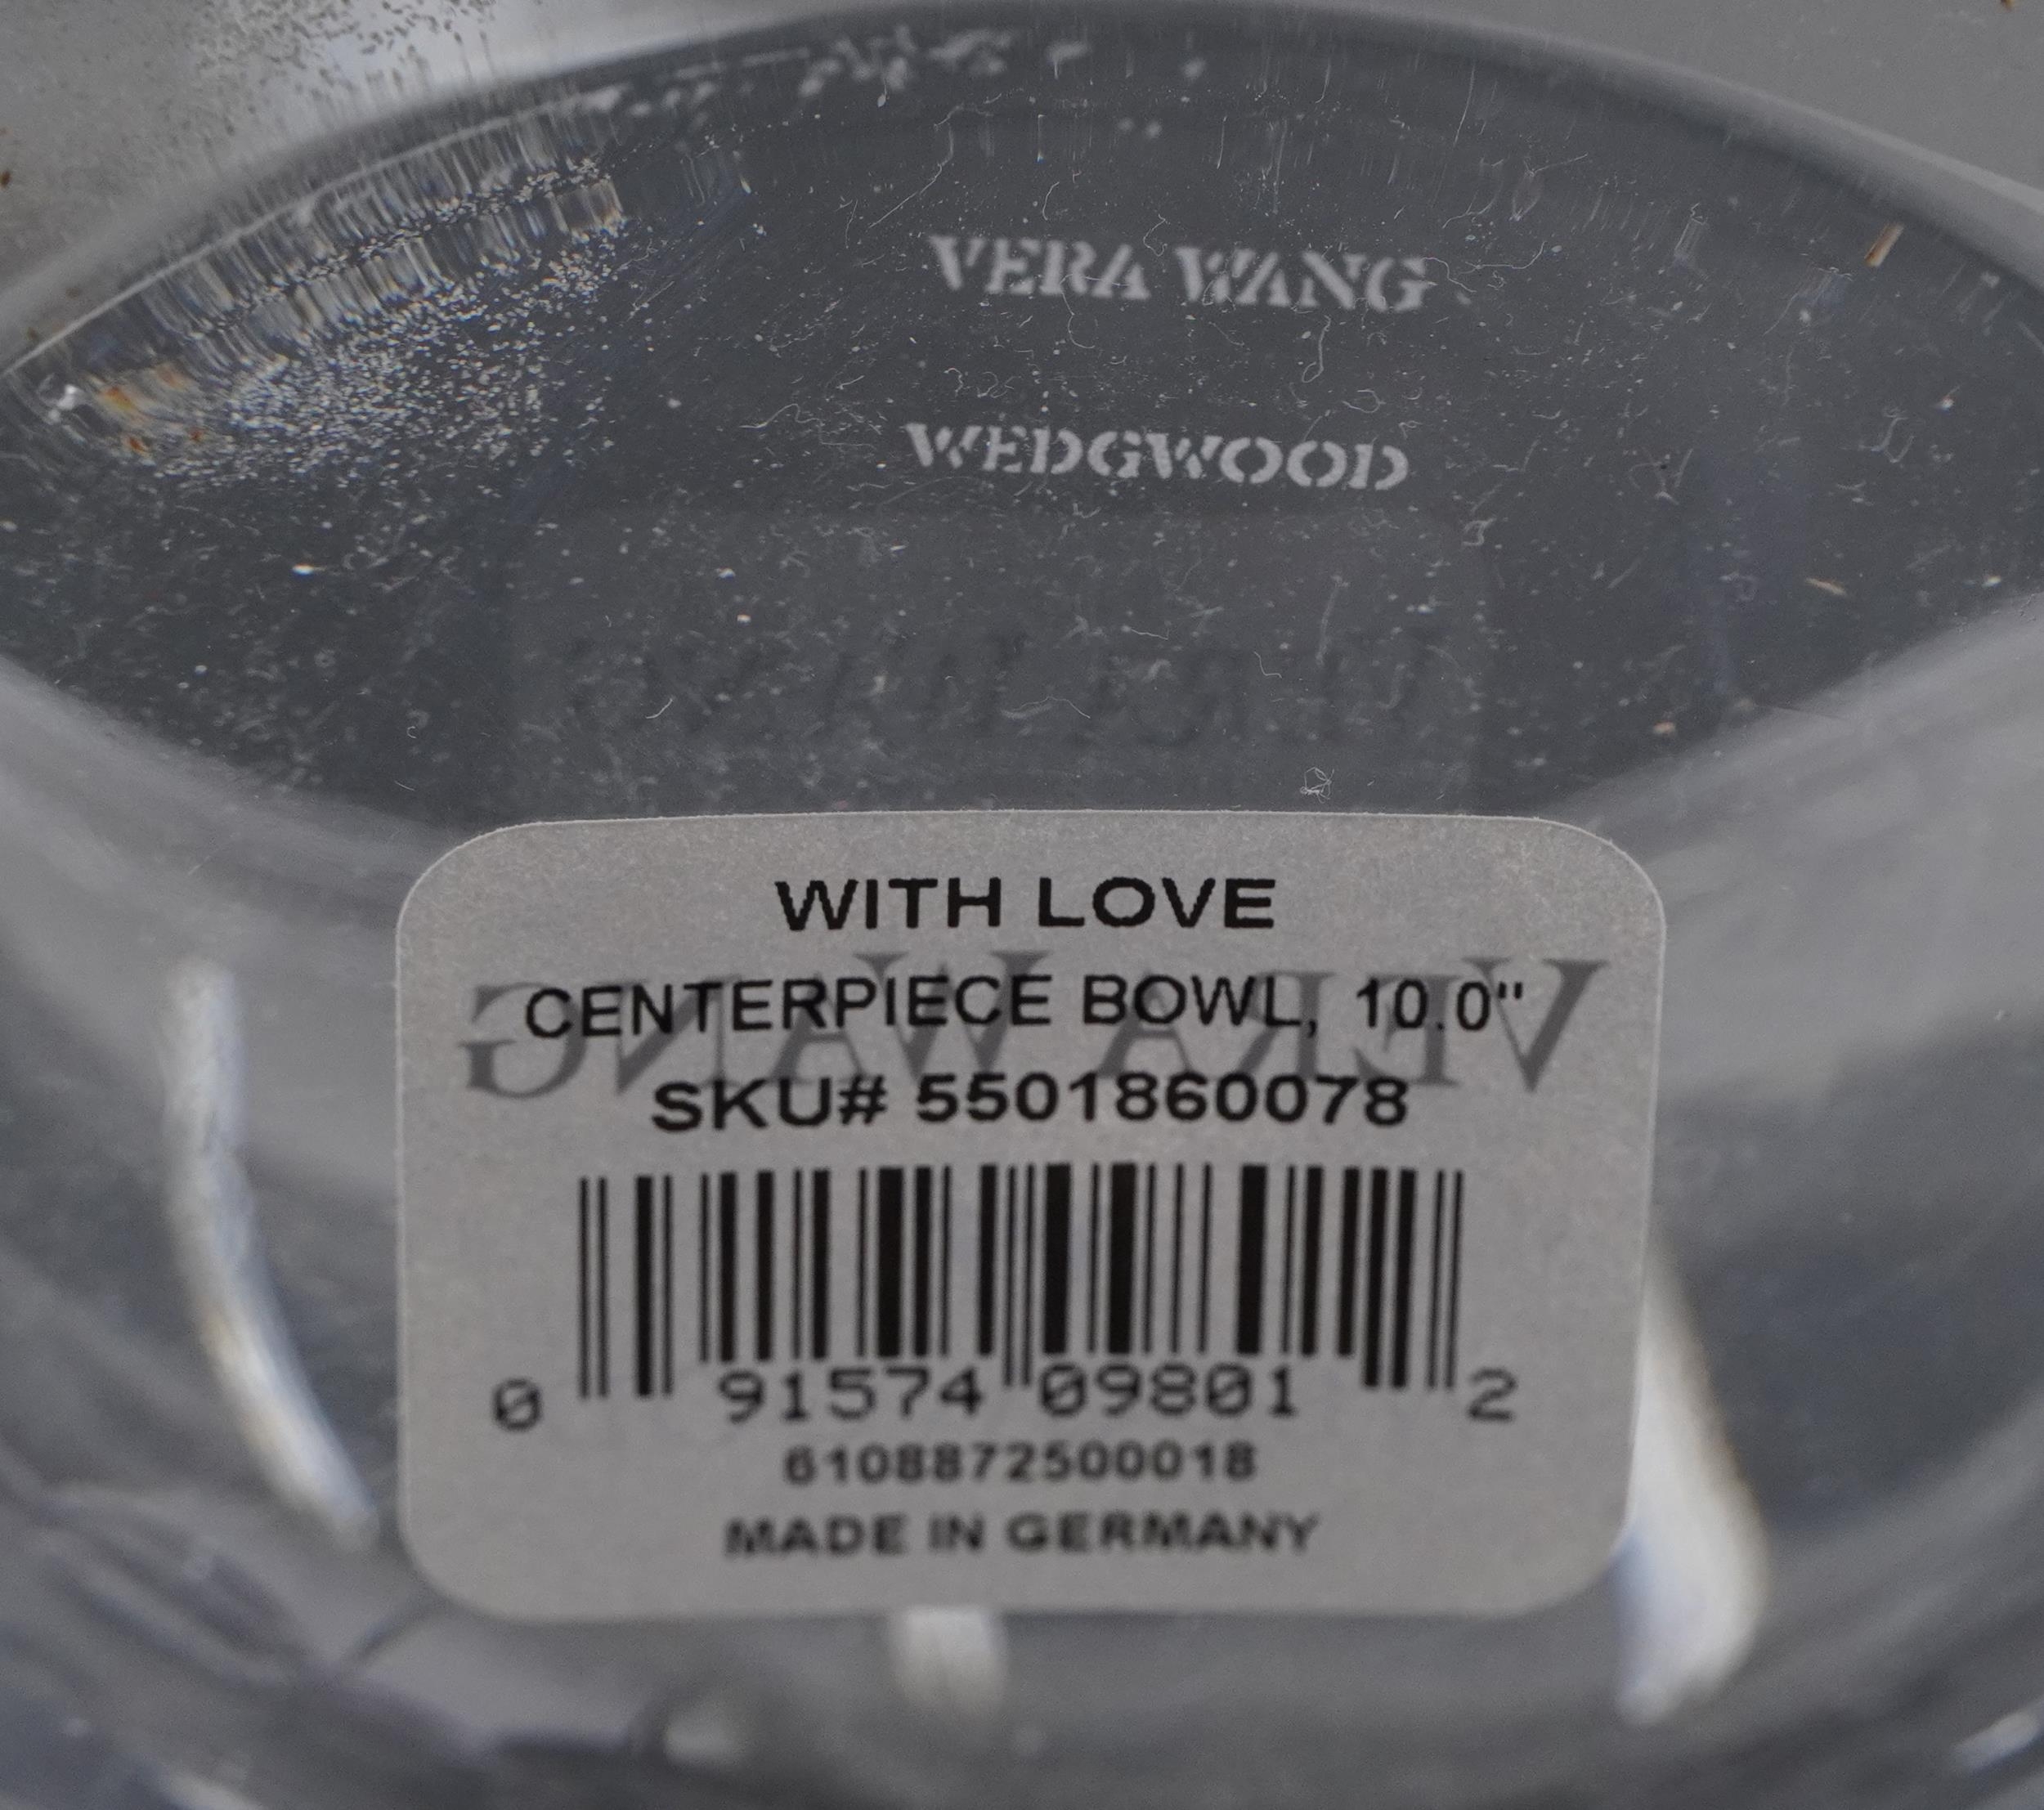 Wedgwood glass vase designed by Vera Wang, 17.5cm high - Image 4 of 4